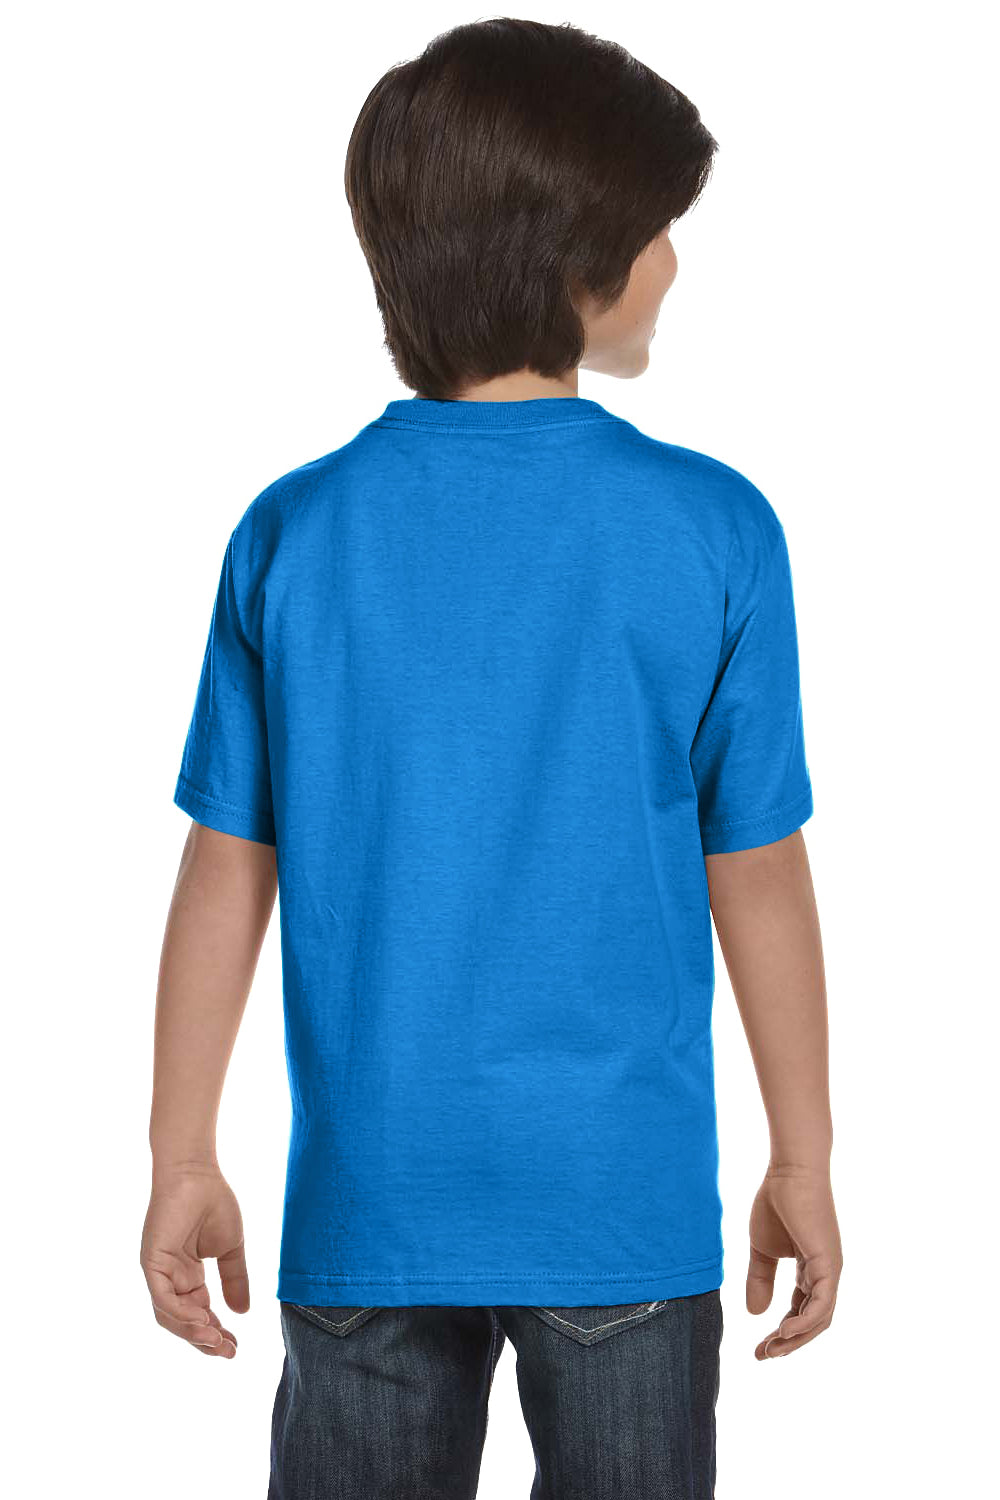 Hanes 5480 ComfortSoft Short Sleeve Crewneck T-Shirt Breeze Blue Back